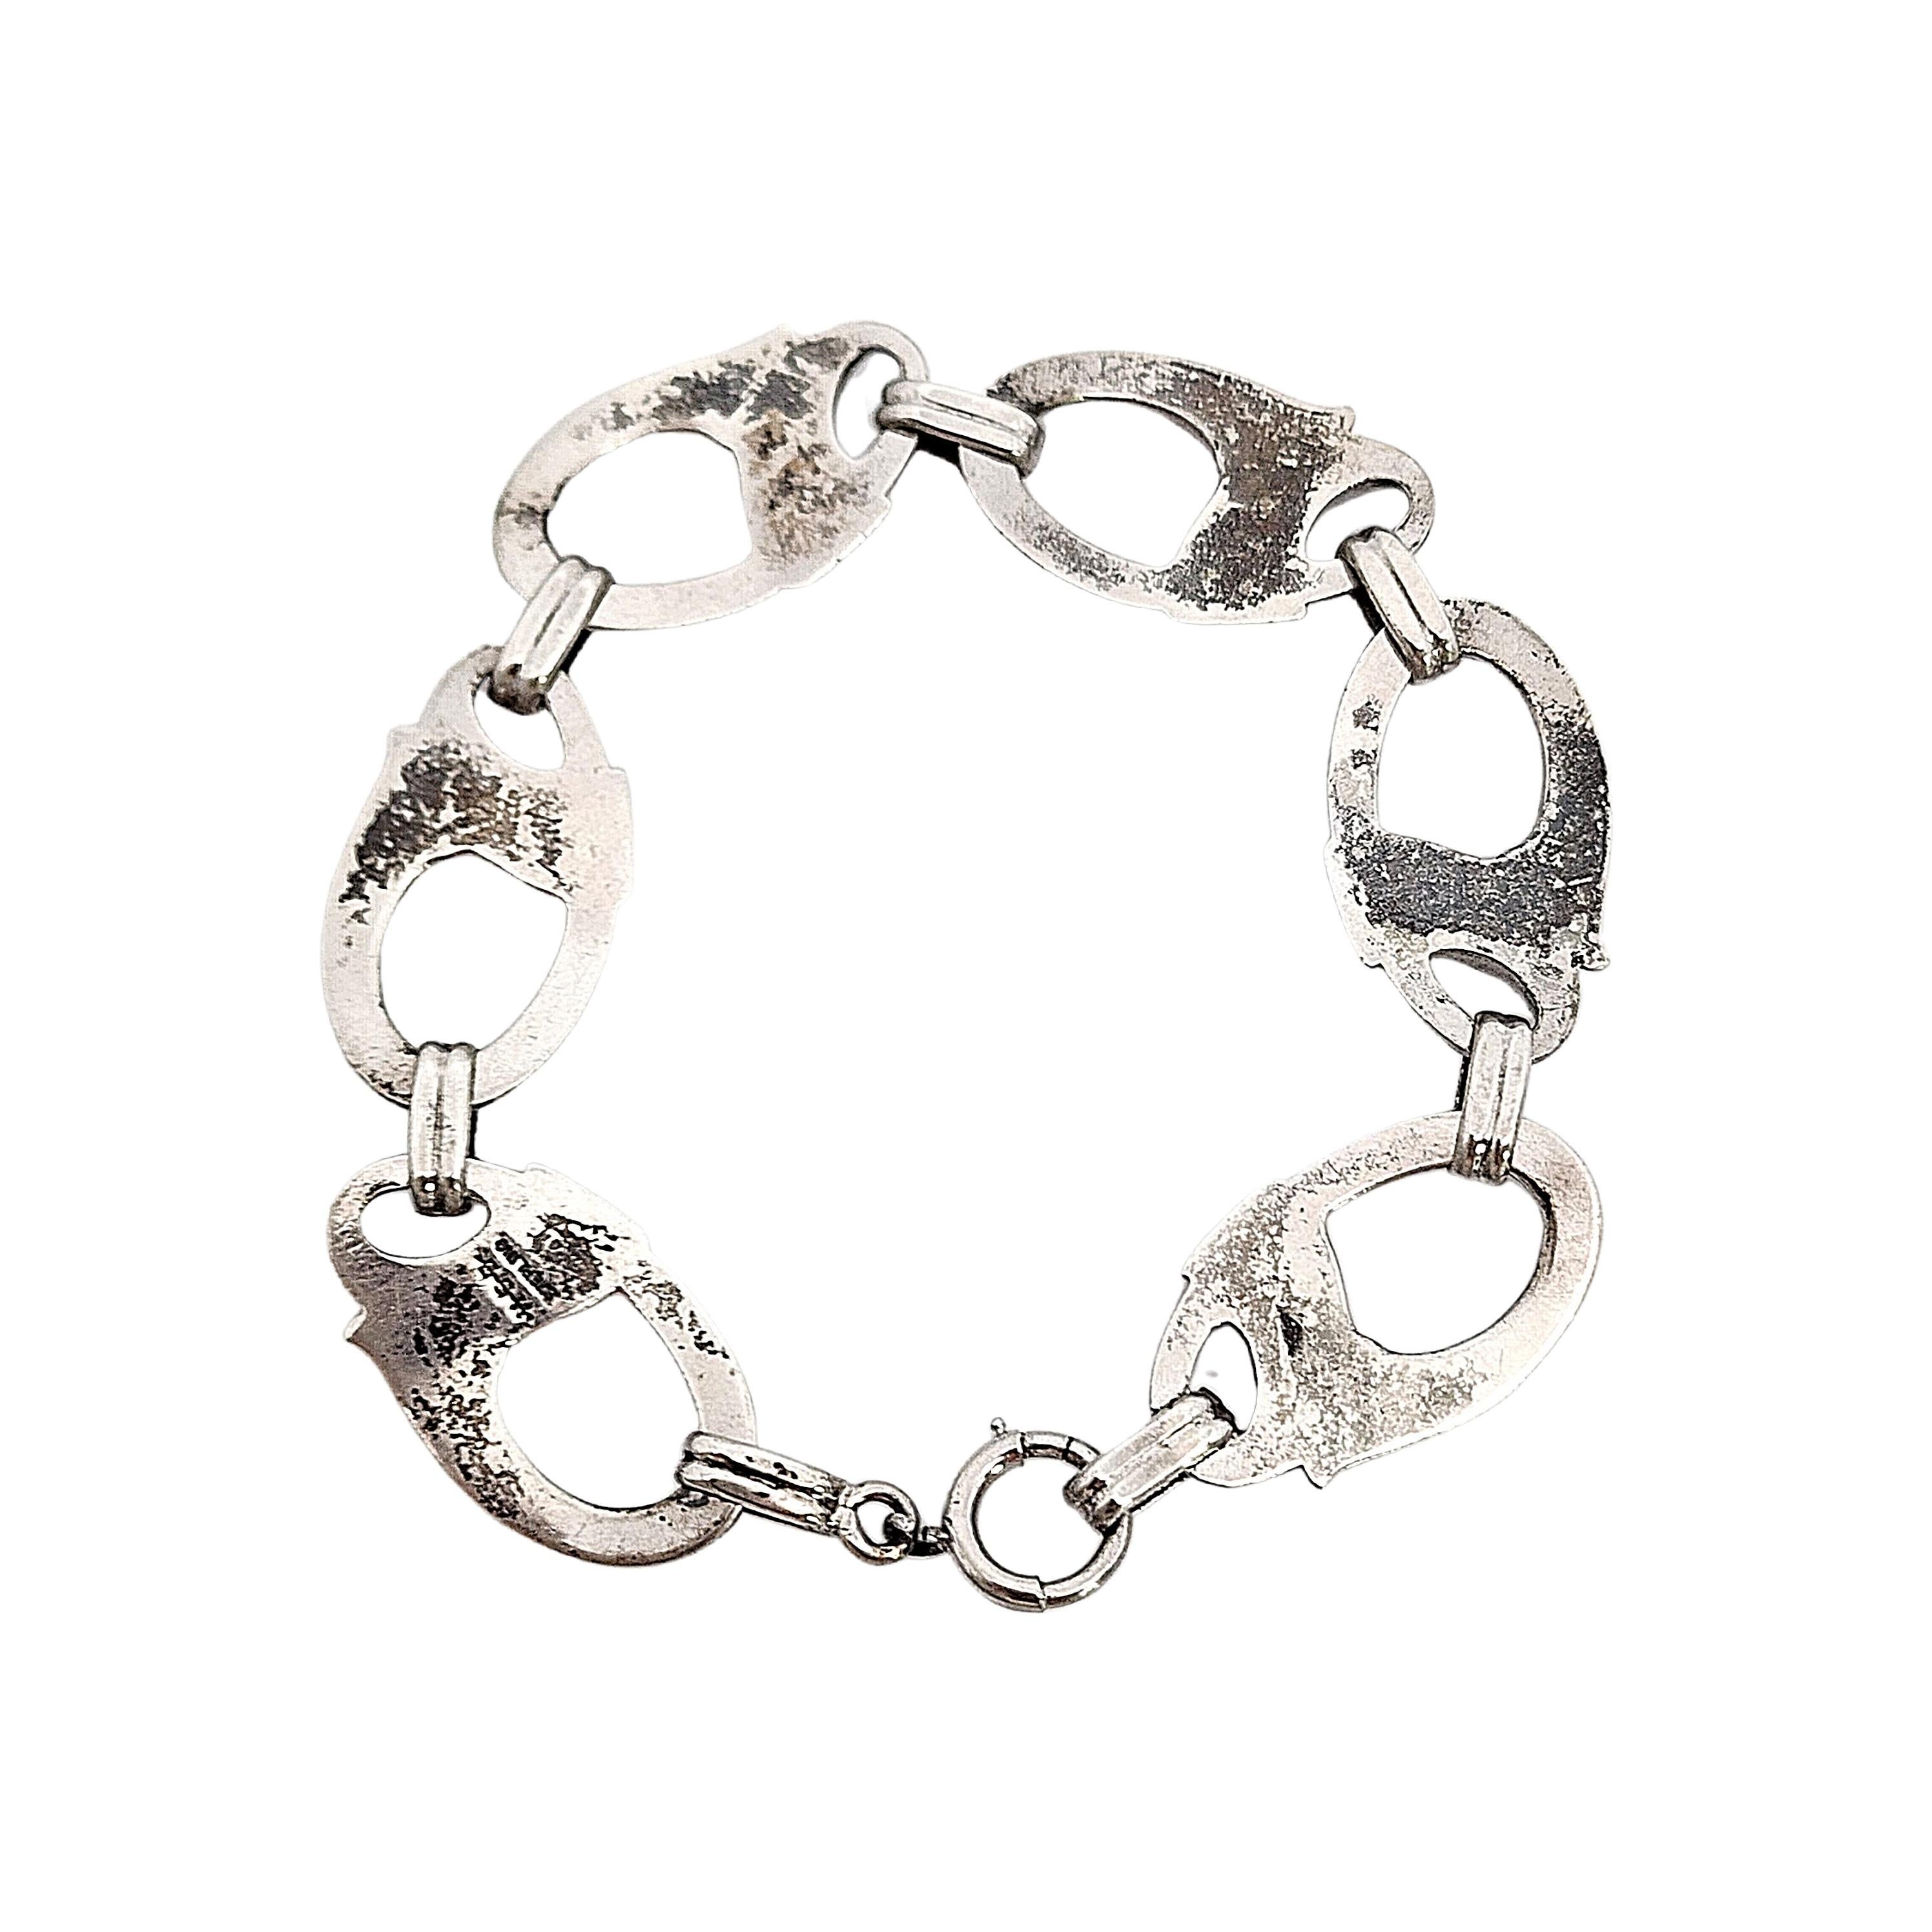 Harry S. Bick sterling silver swirl link bracelet.

Beautiful Art Deco piece featuring large oval swirl/flourish links.

Measures approx 7